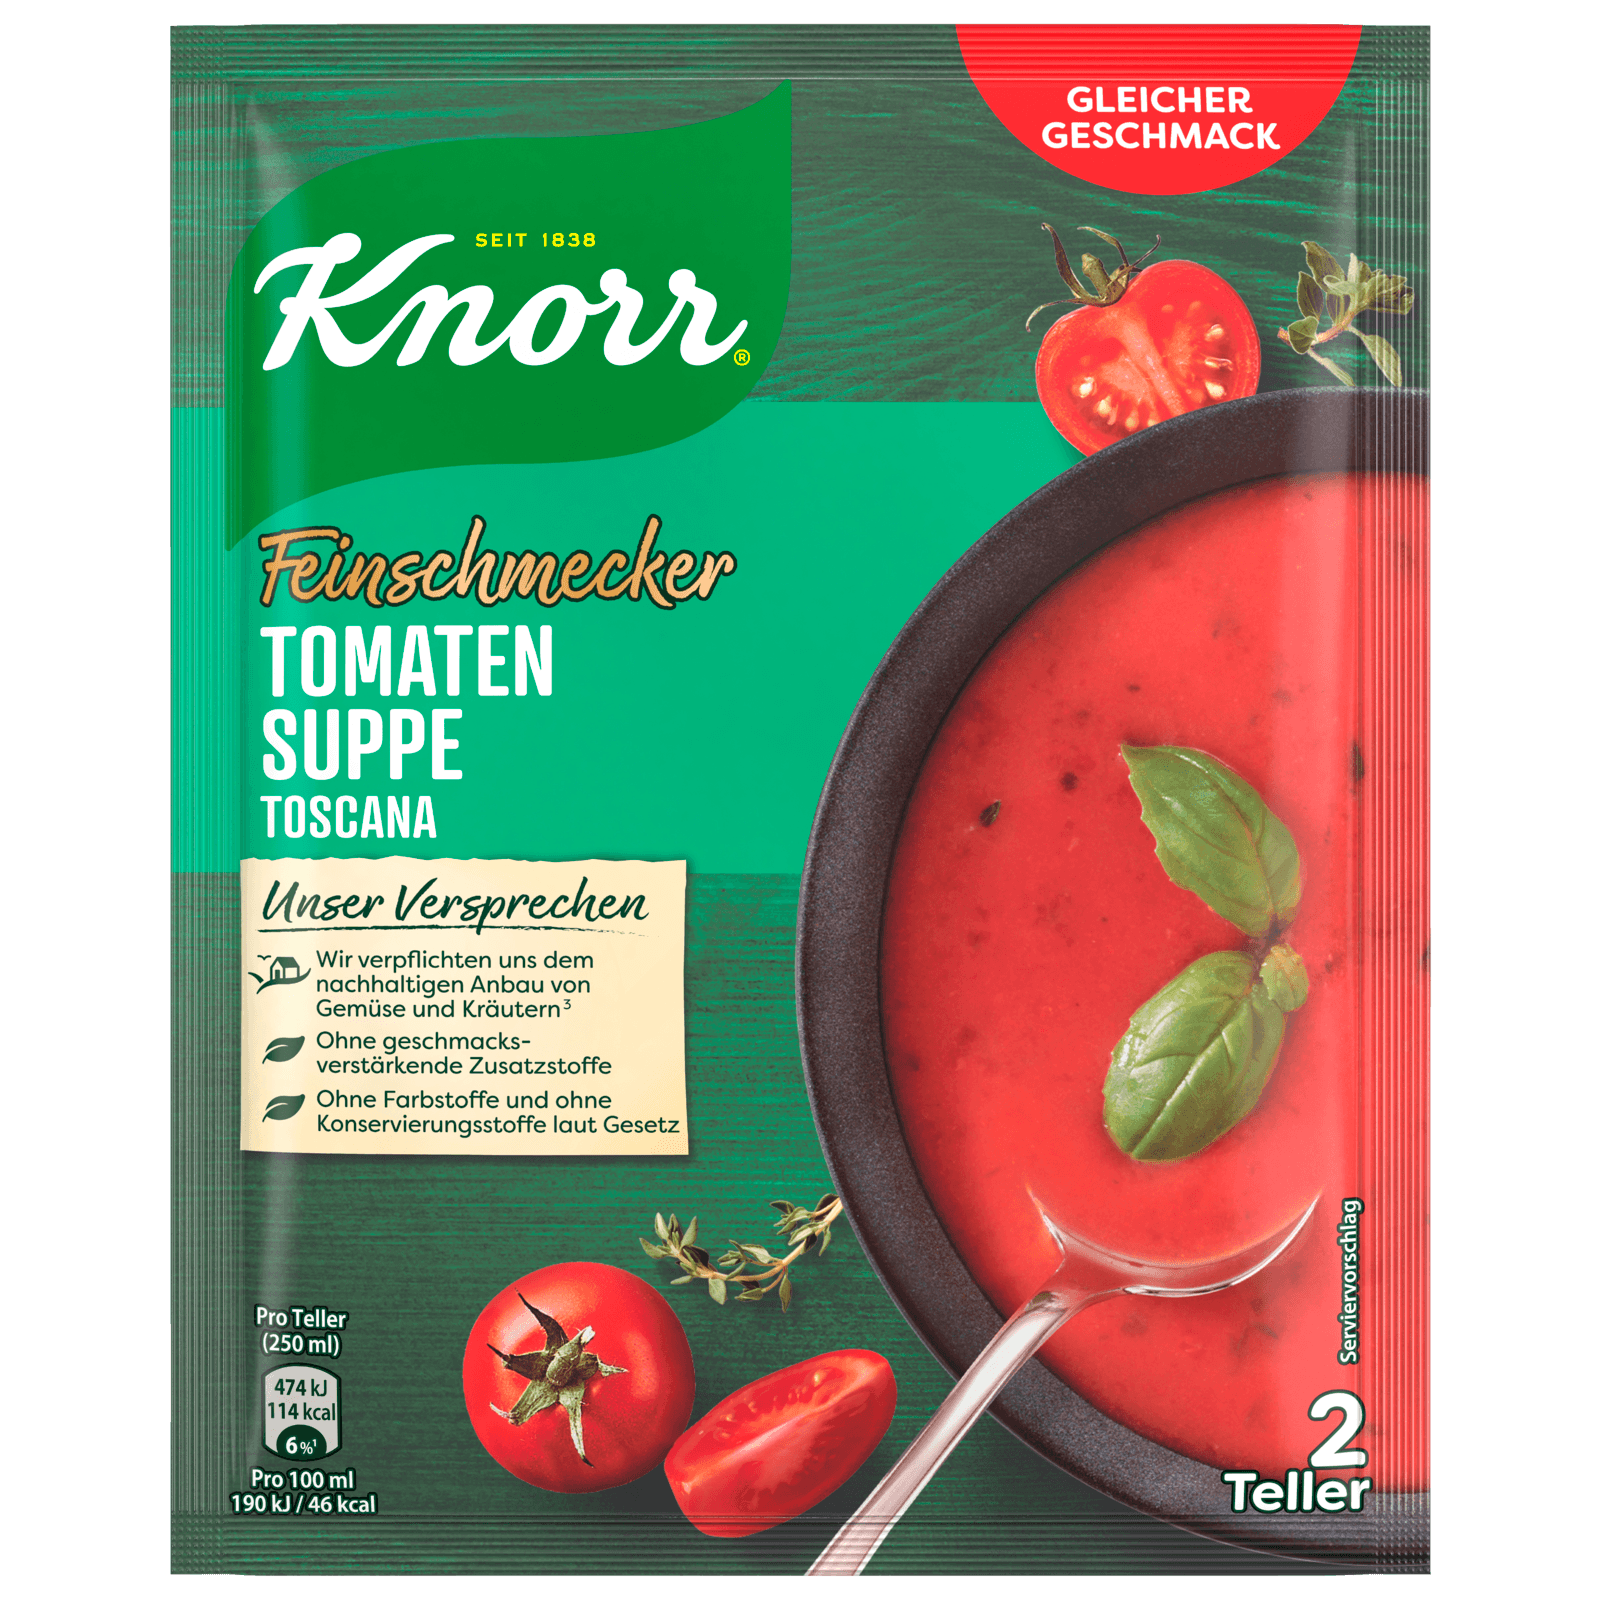 Knorr Feinschmecker Tomaten Suppe Toscana 500ml bei REWE online bestellen!